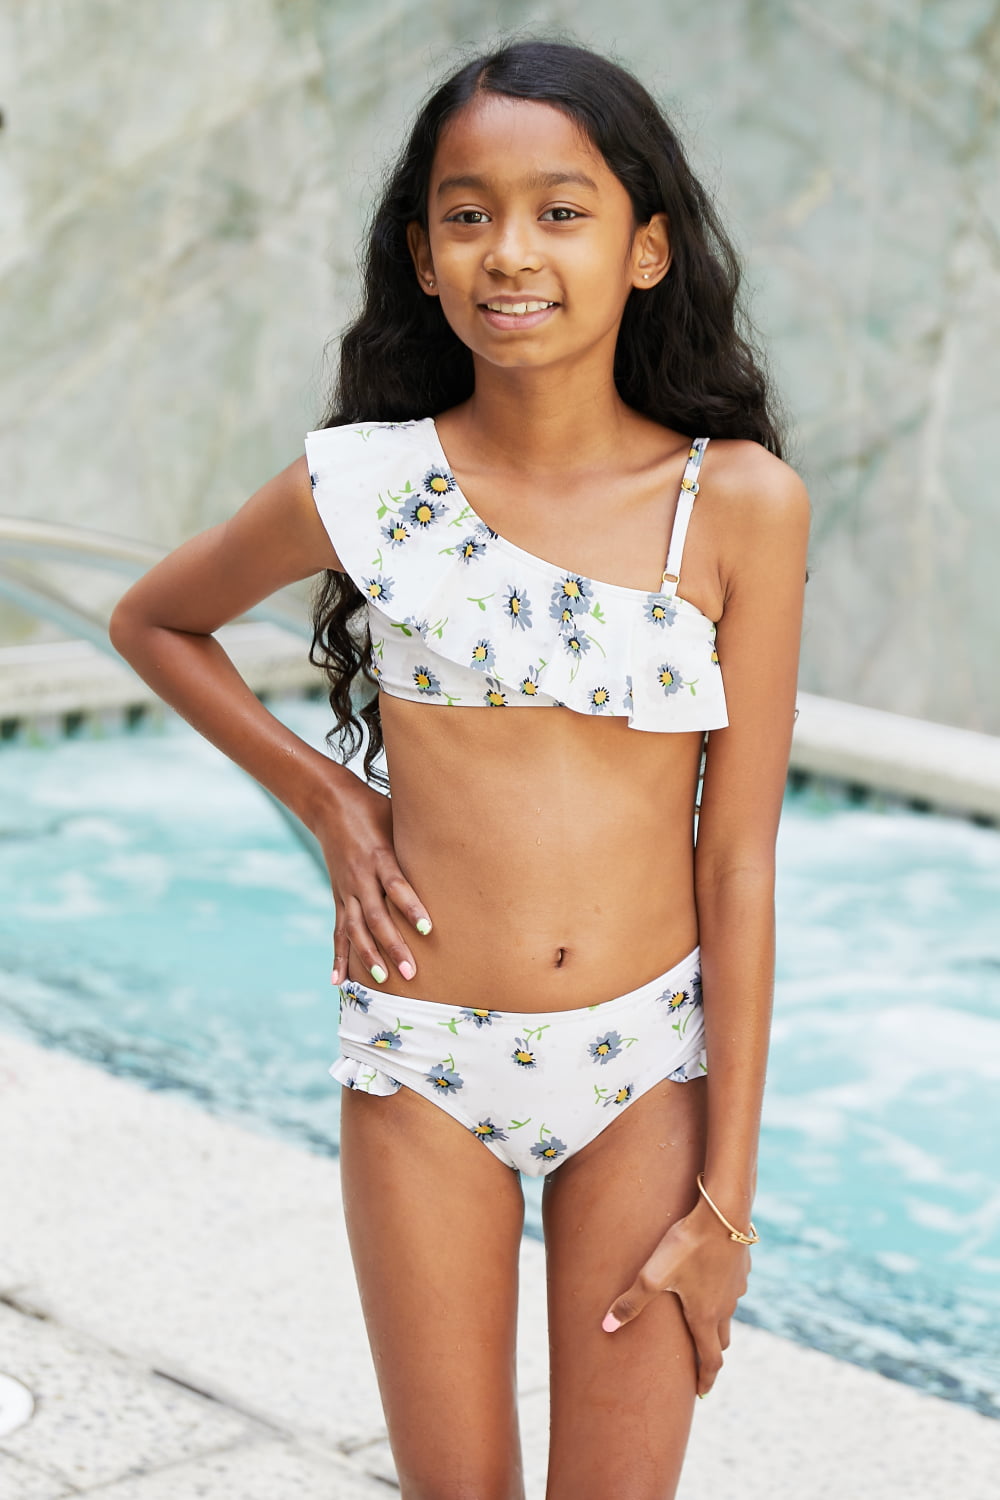 Girls Swim Suits Size 14-16 Beach Sport 2-Piece Outfits Swimsuit Daisy  Girls' Girls Swimwear Kids Bathing Suits